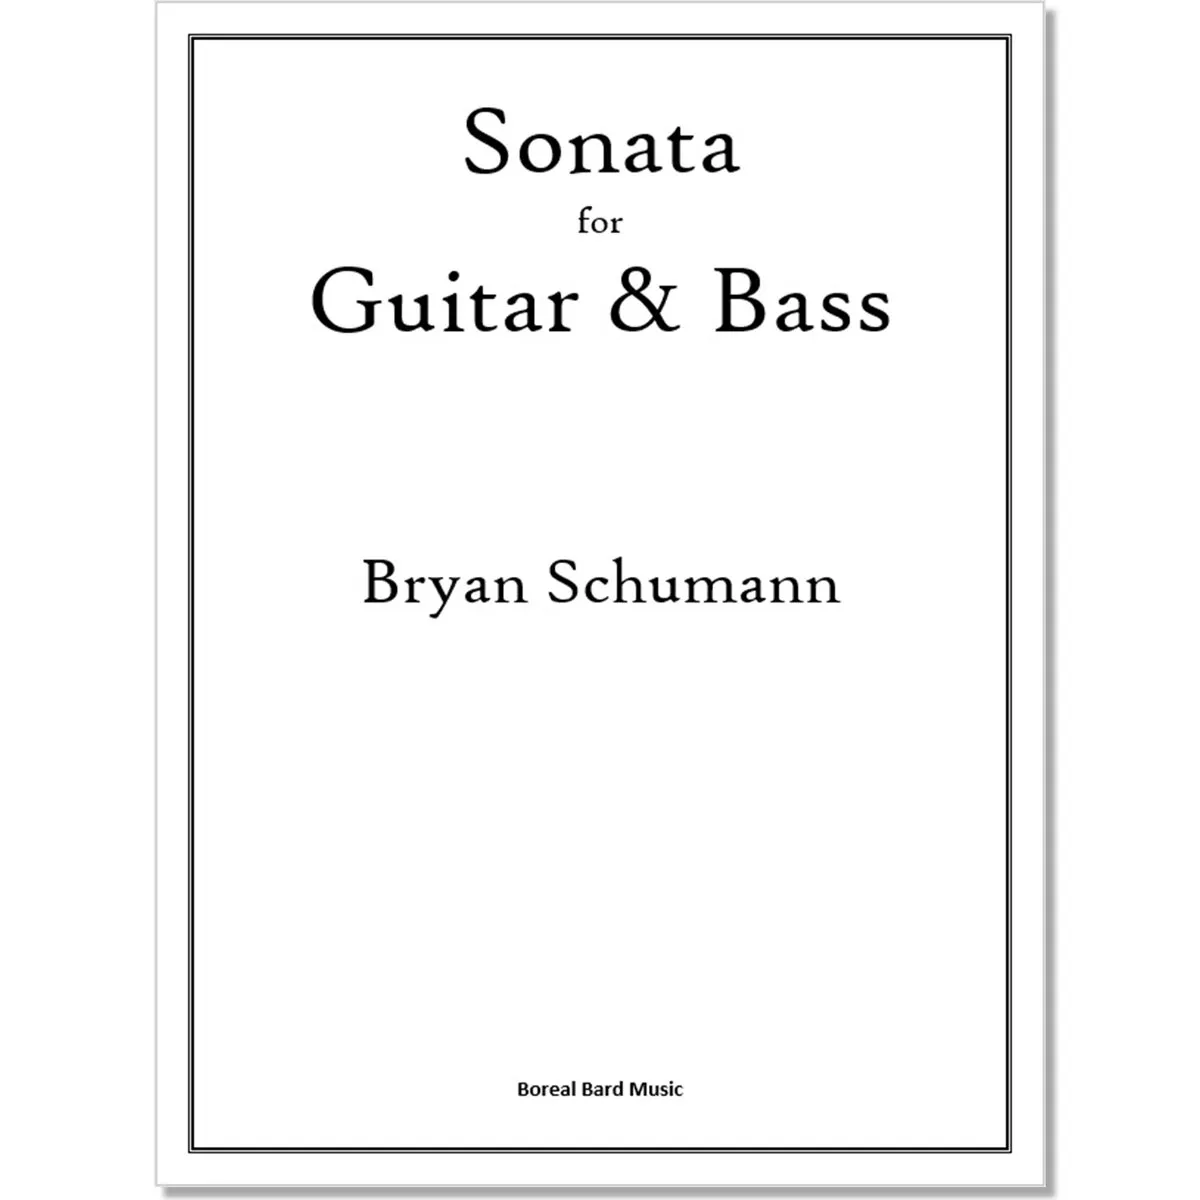 Sonata for Guitar & Bass (sheet music)